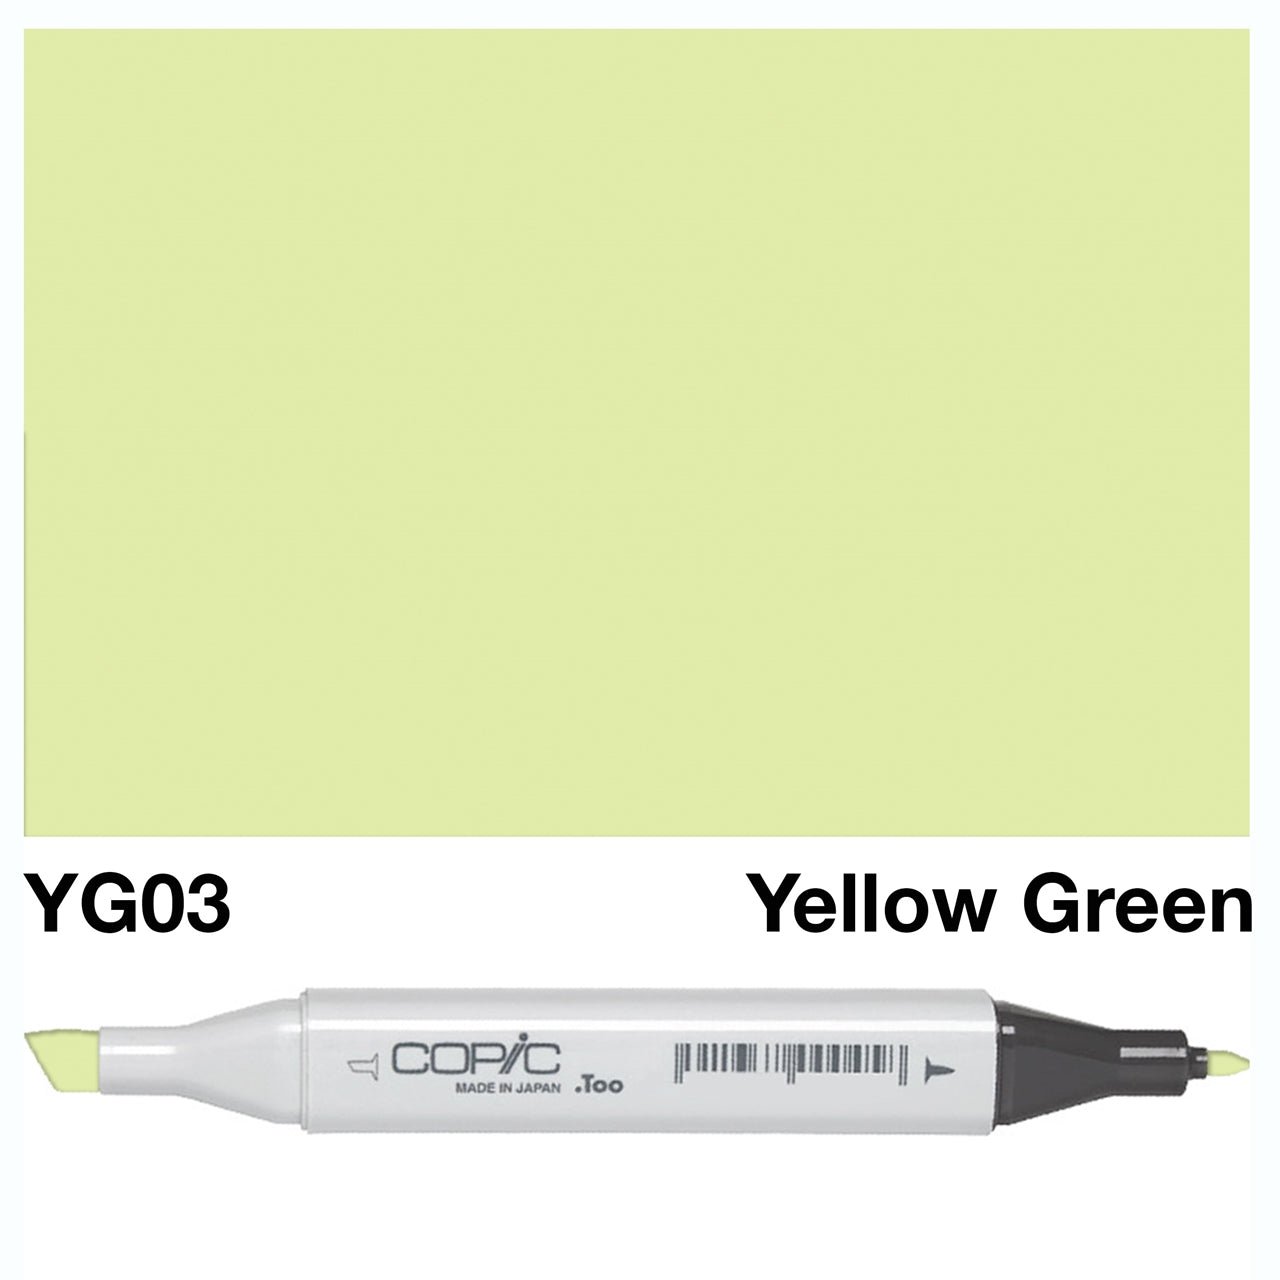 Copic Classic Marker YG03 Yellow Green - theartshop.com.au